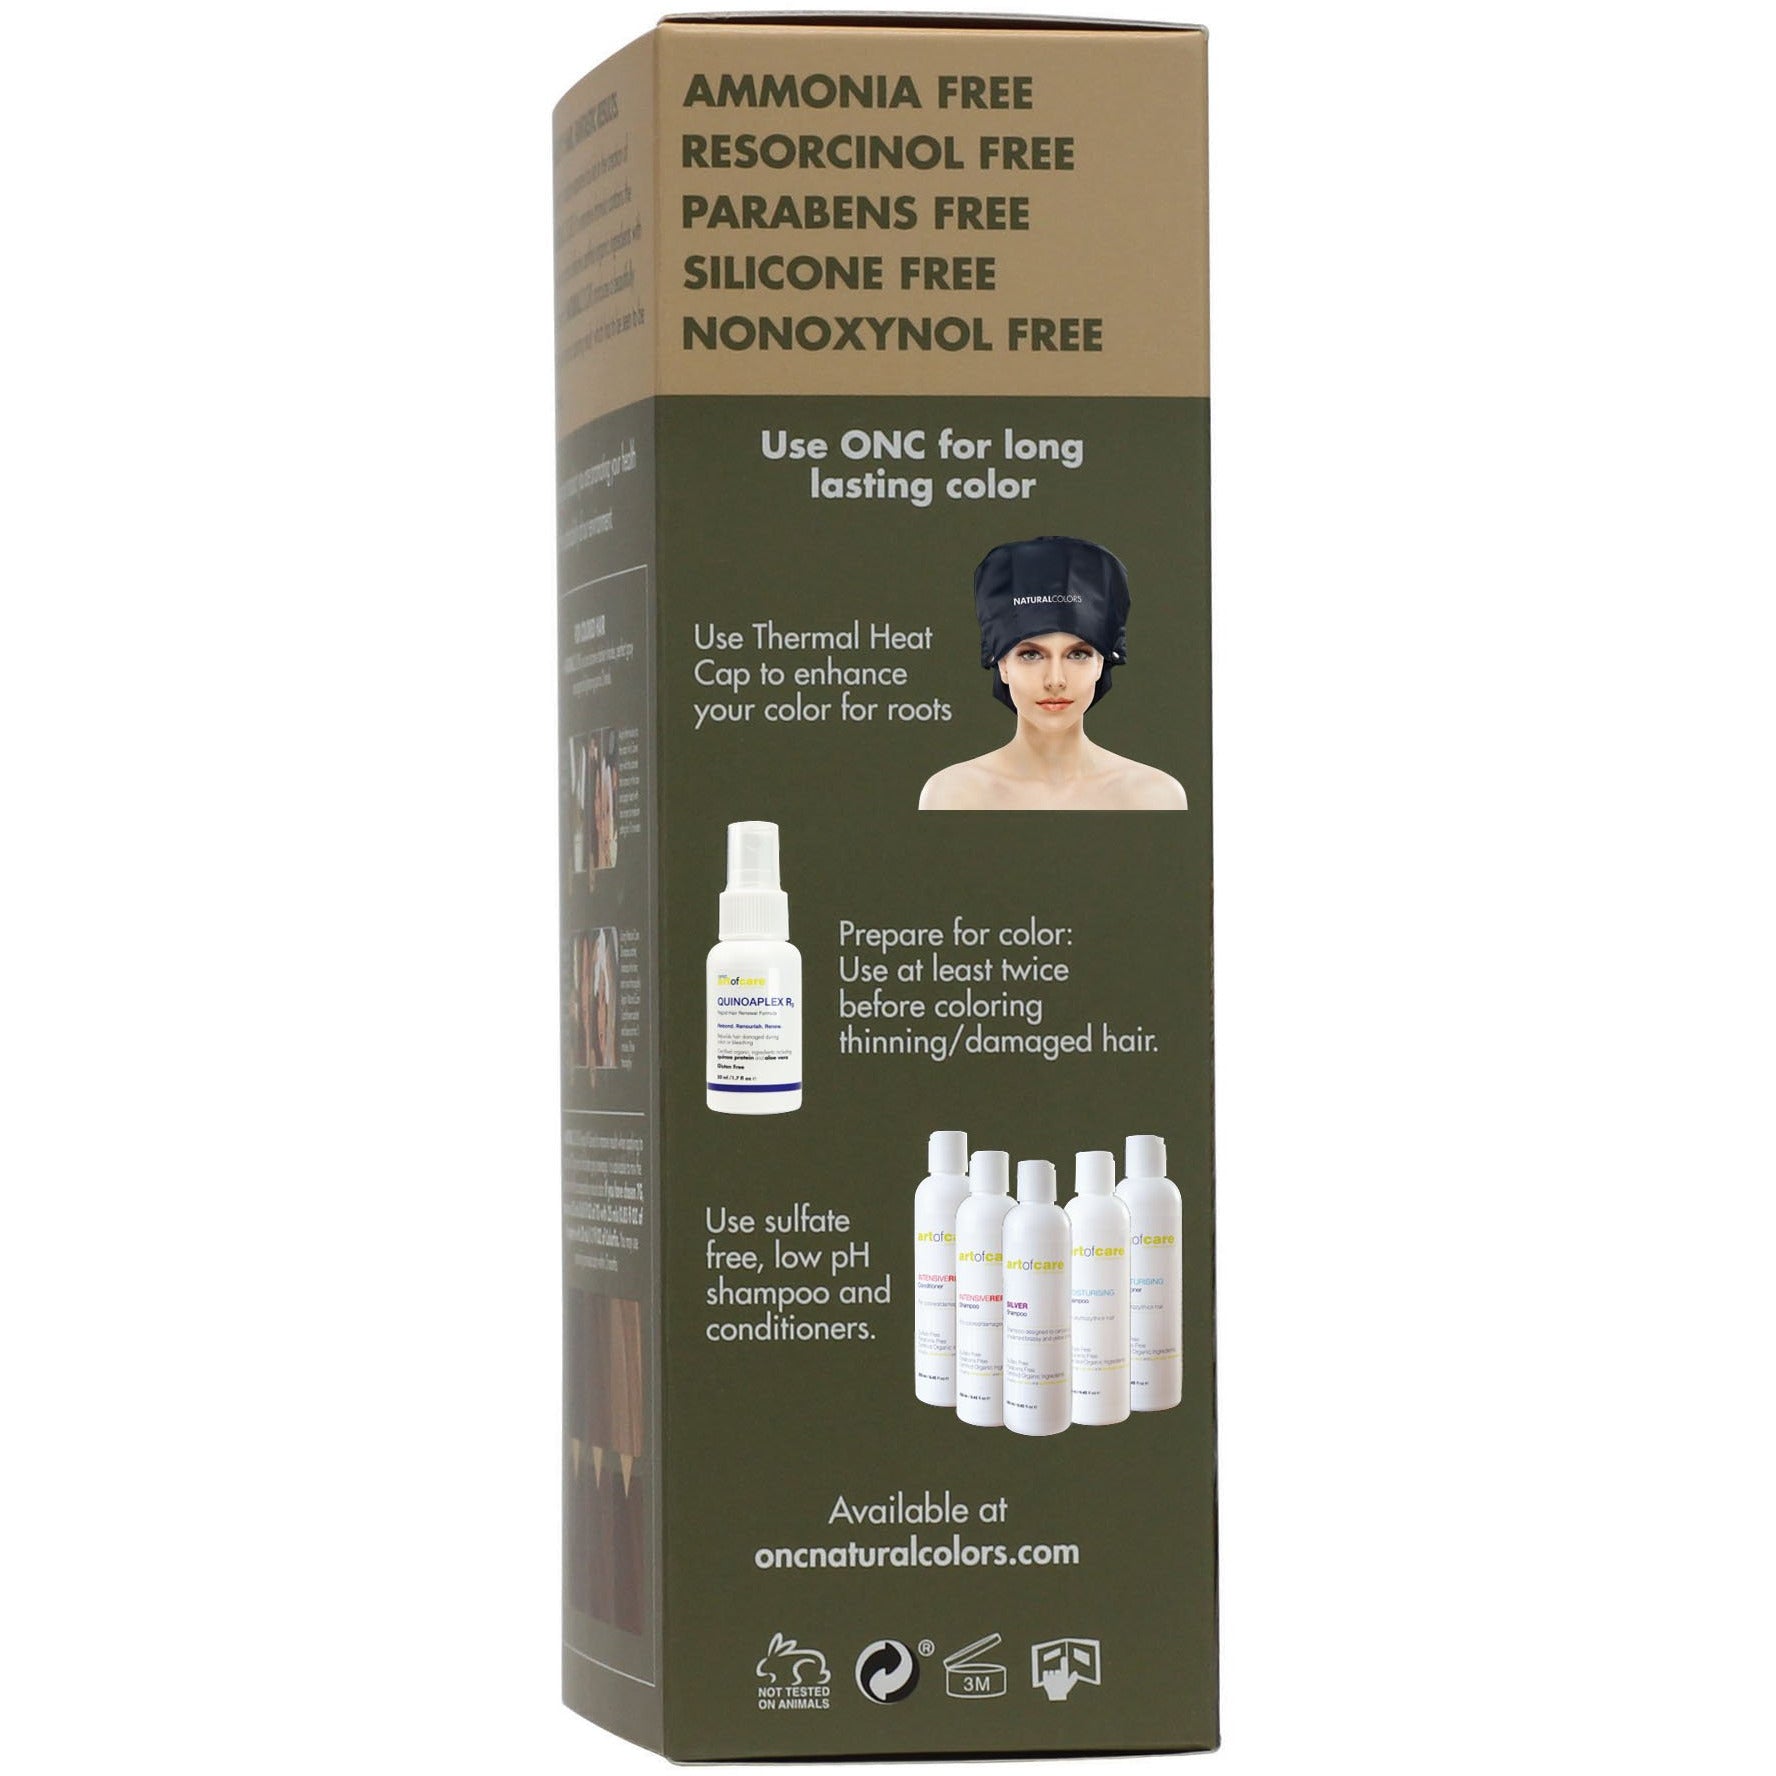 4N Natural Medium Brown Heat Activated Hair Dye With Organic Ingredients - 120 ml (4 fl. oz)